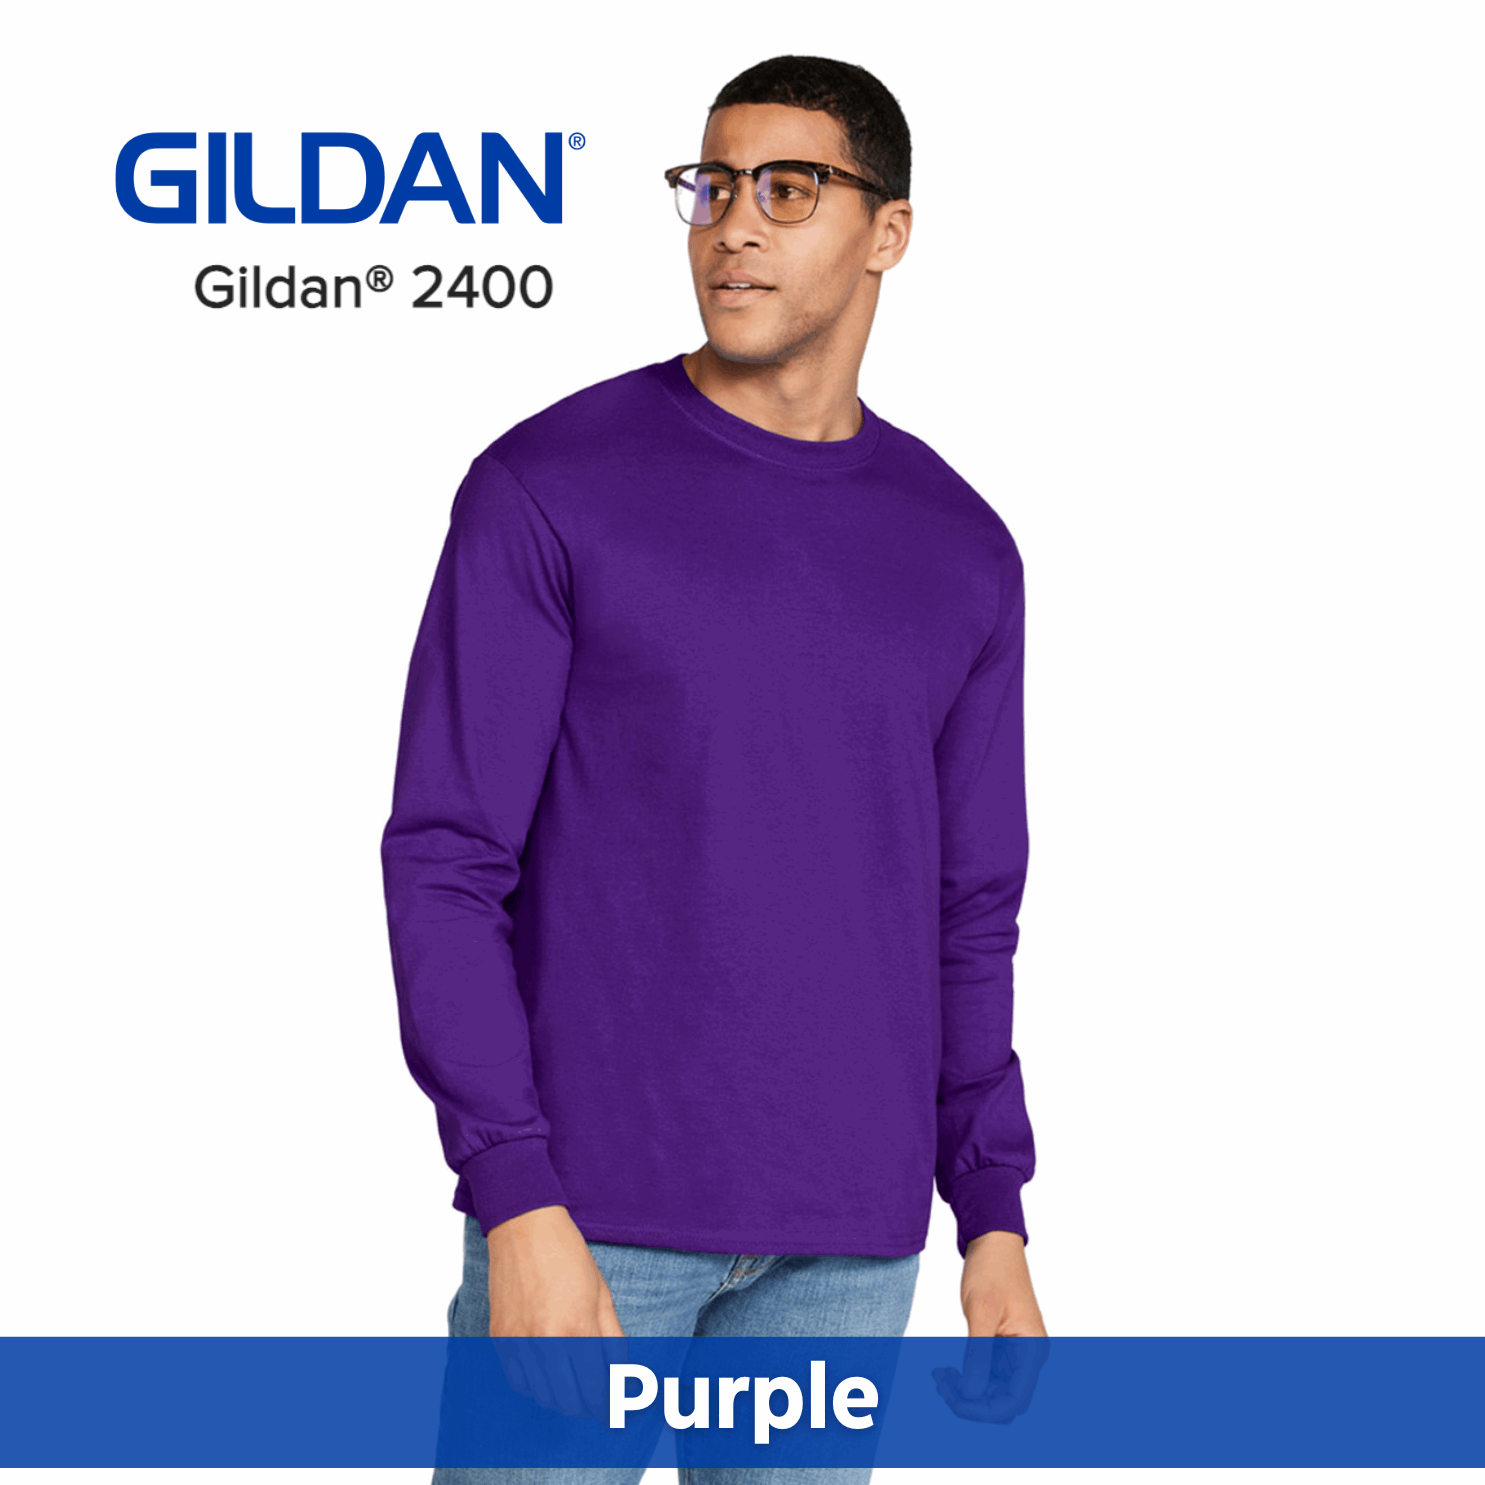 One Color Imprint Gildan® 2400 Long Sleeve T-Shirt 100% Cotton Multiple Colors Available